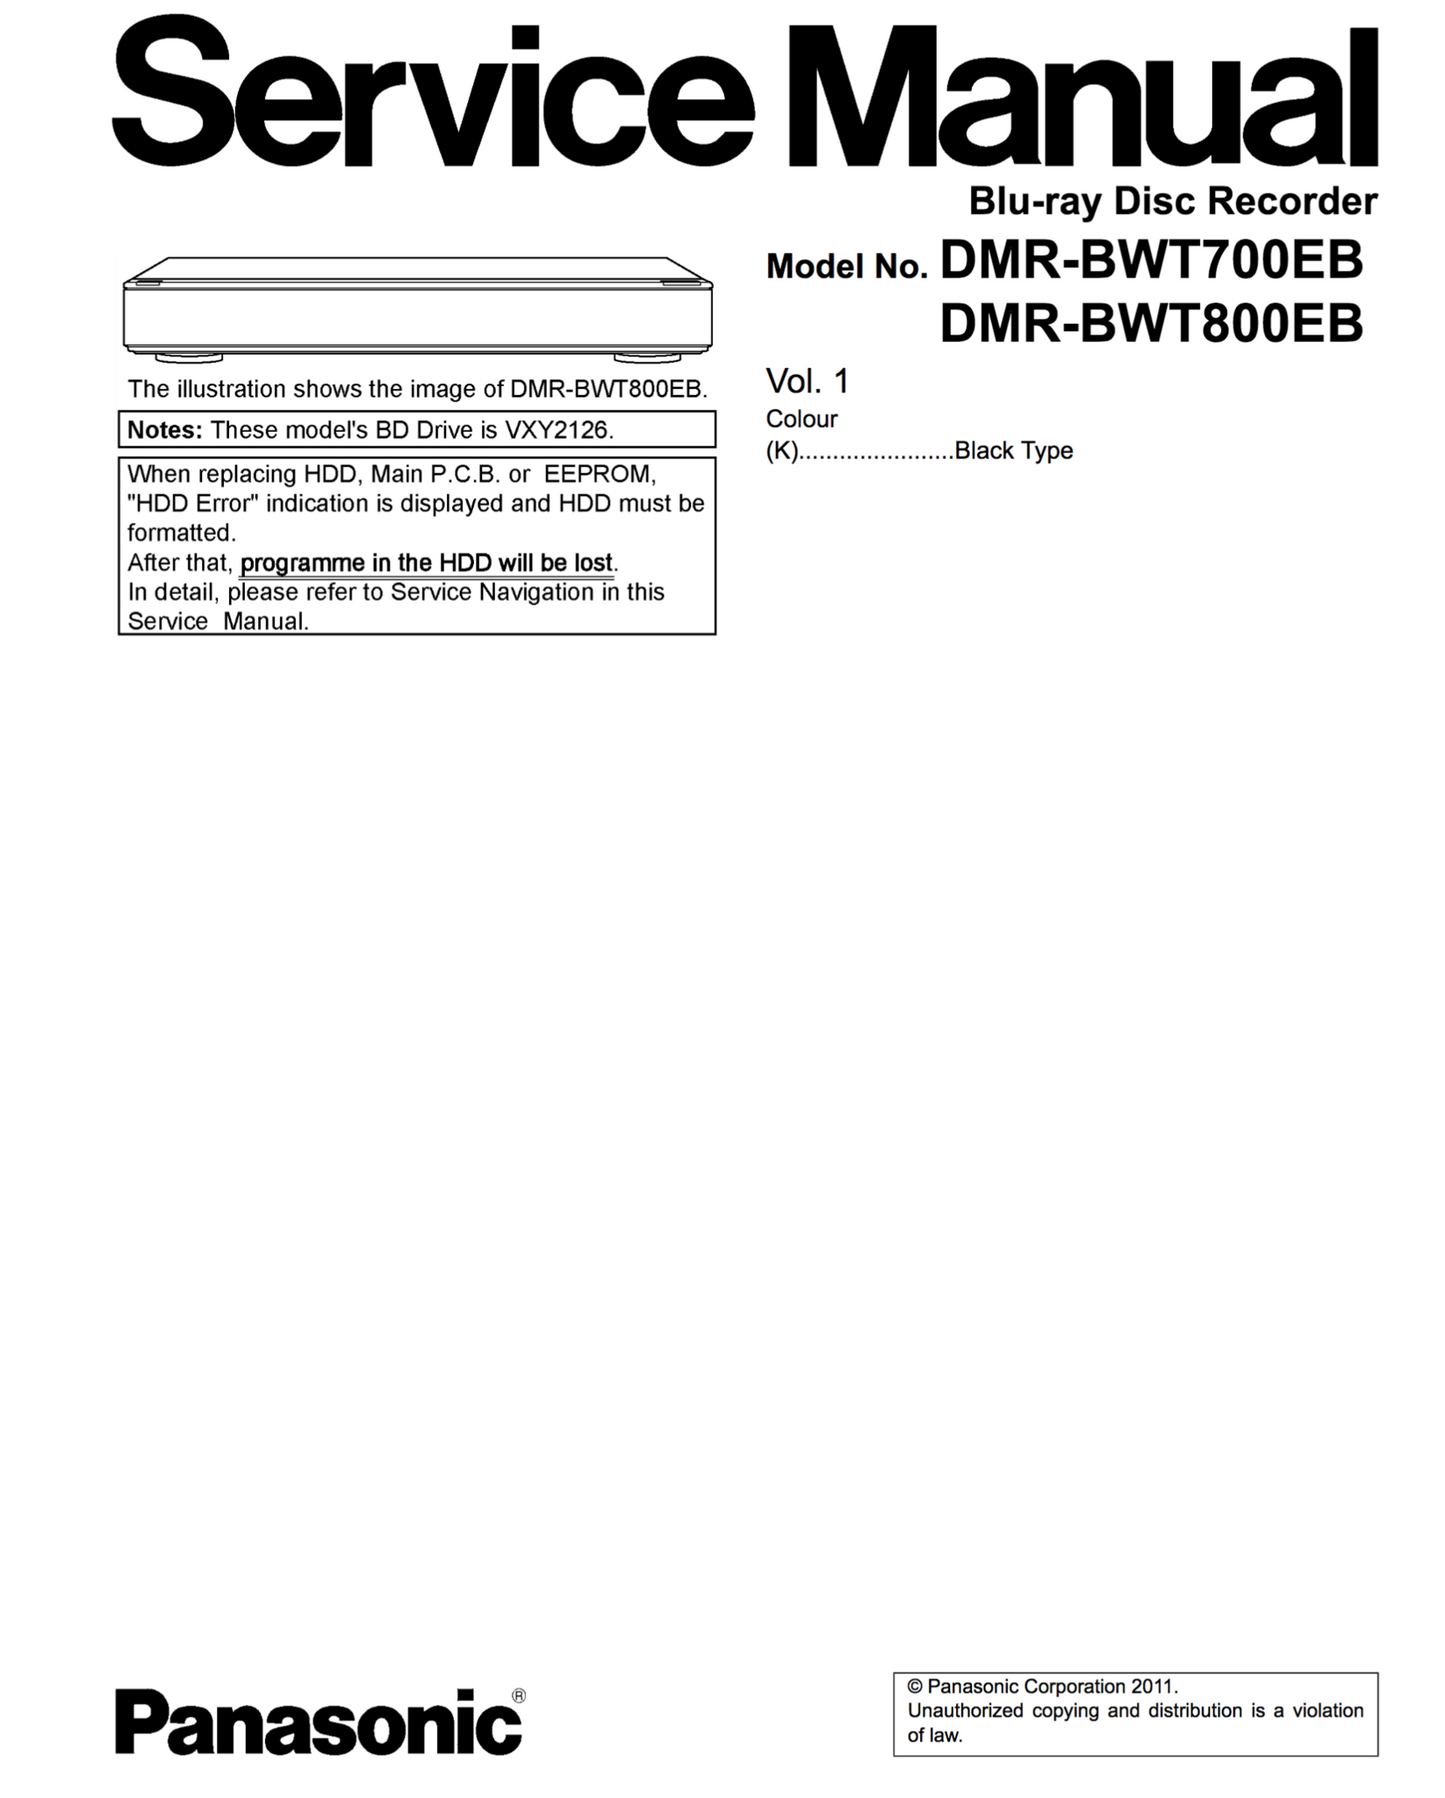 Panasonic DMR-BWT700EB DMR-BWT800EB Service Manual